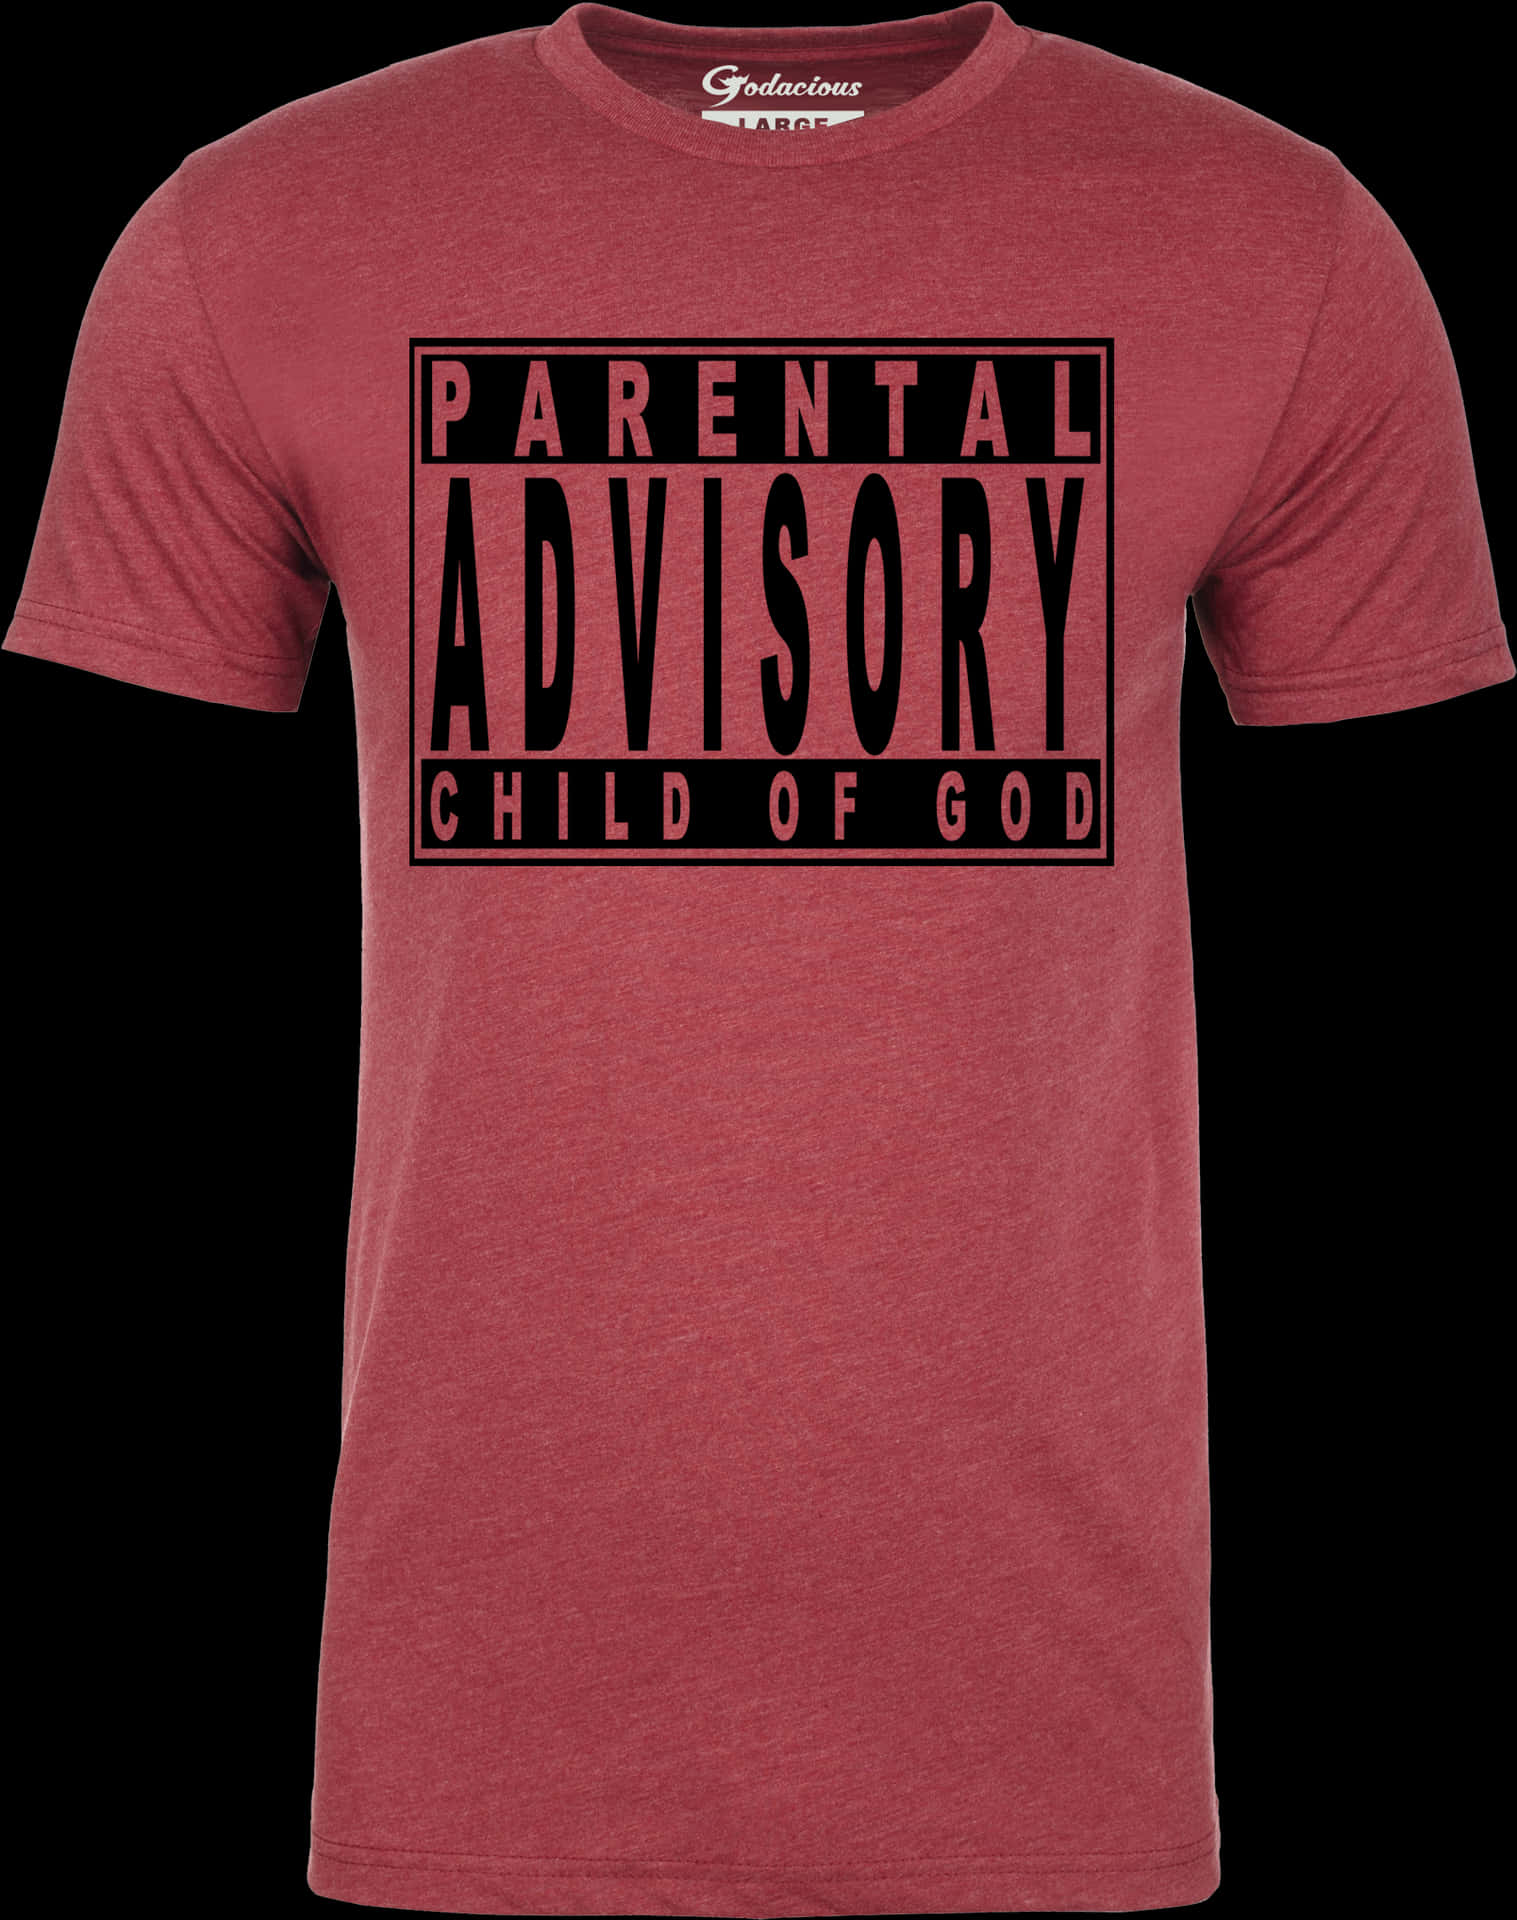 Parental Advisory Childof God Tshirt PNG image